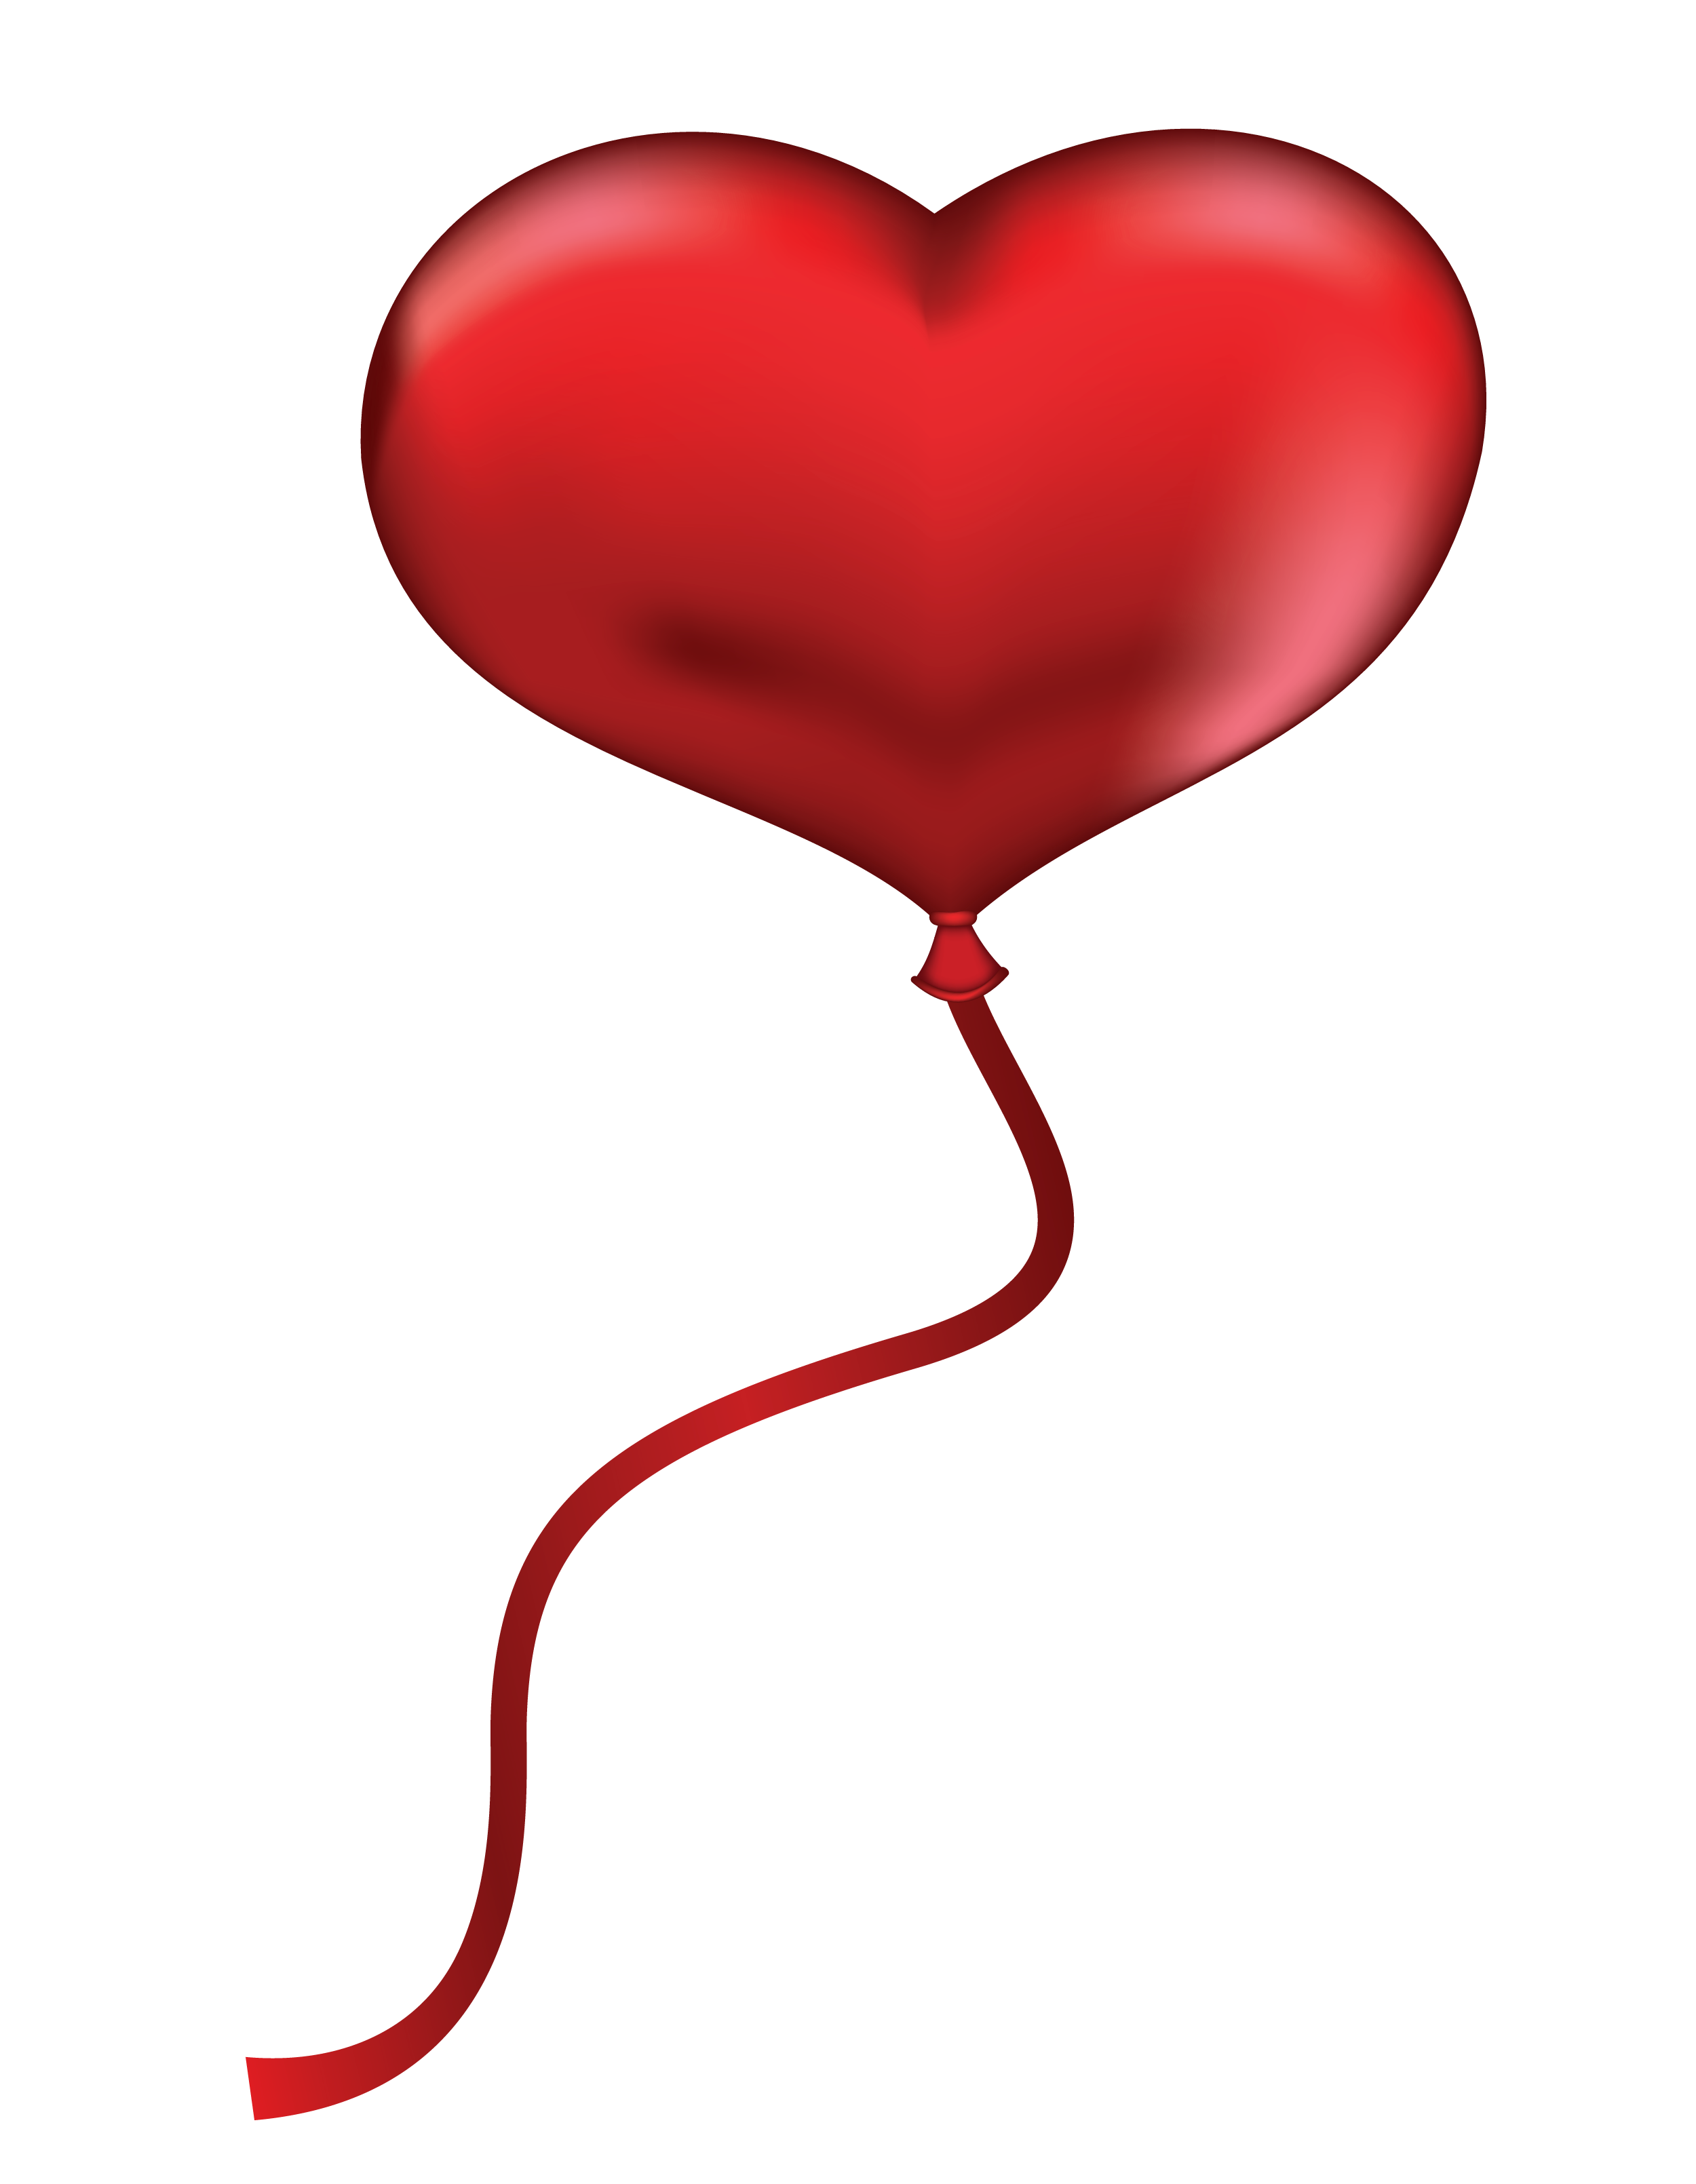 Heart Balloon PNG HD Image